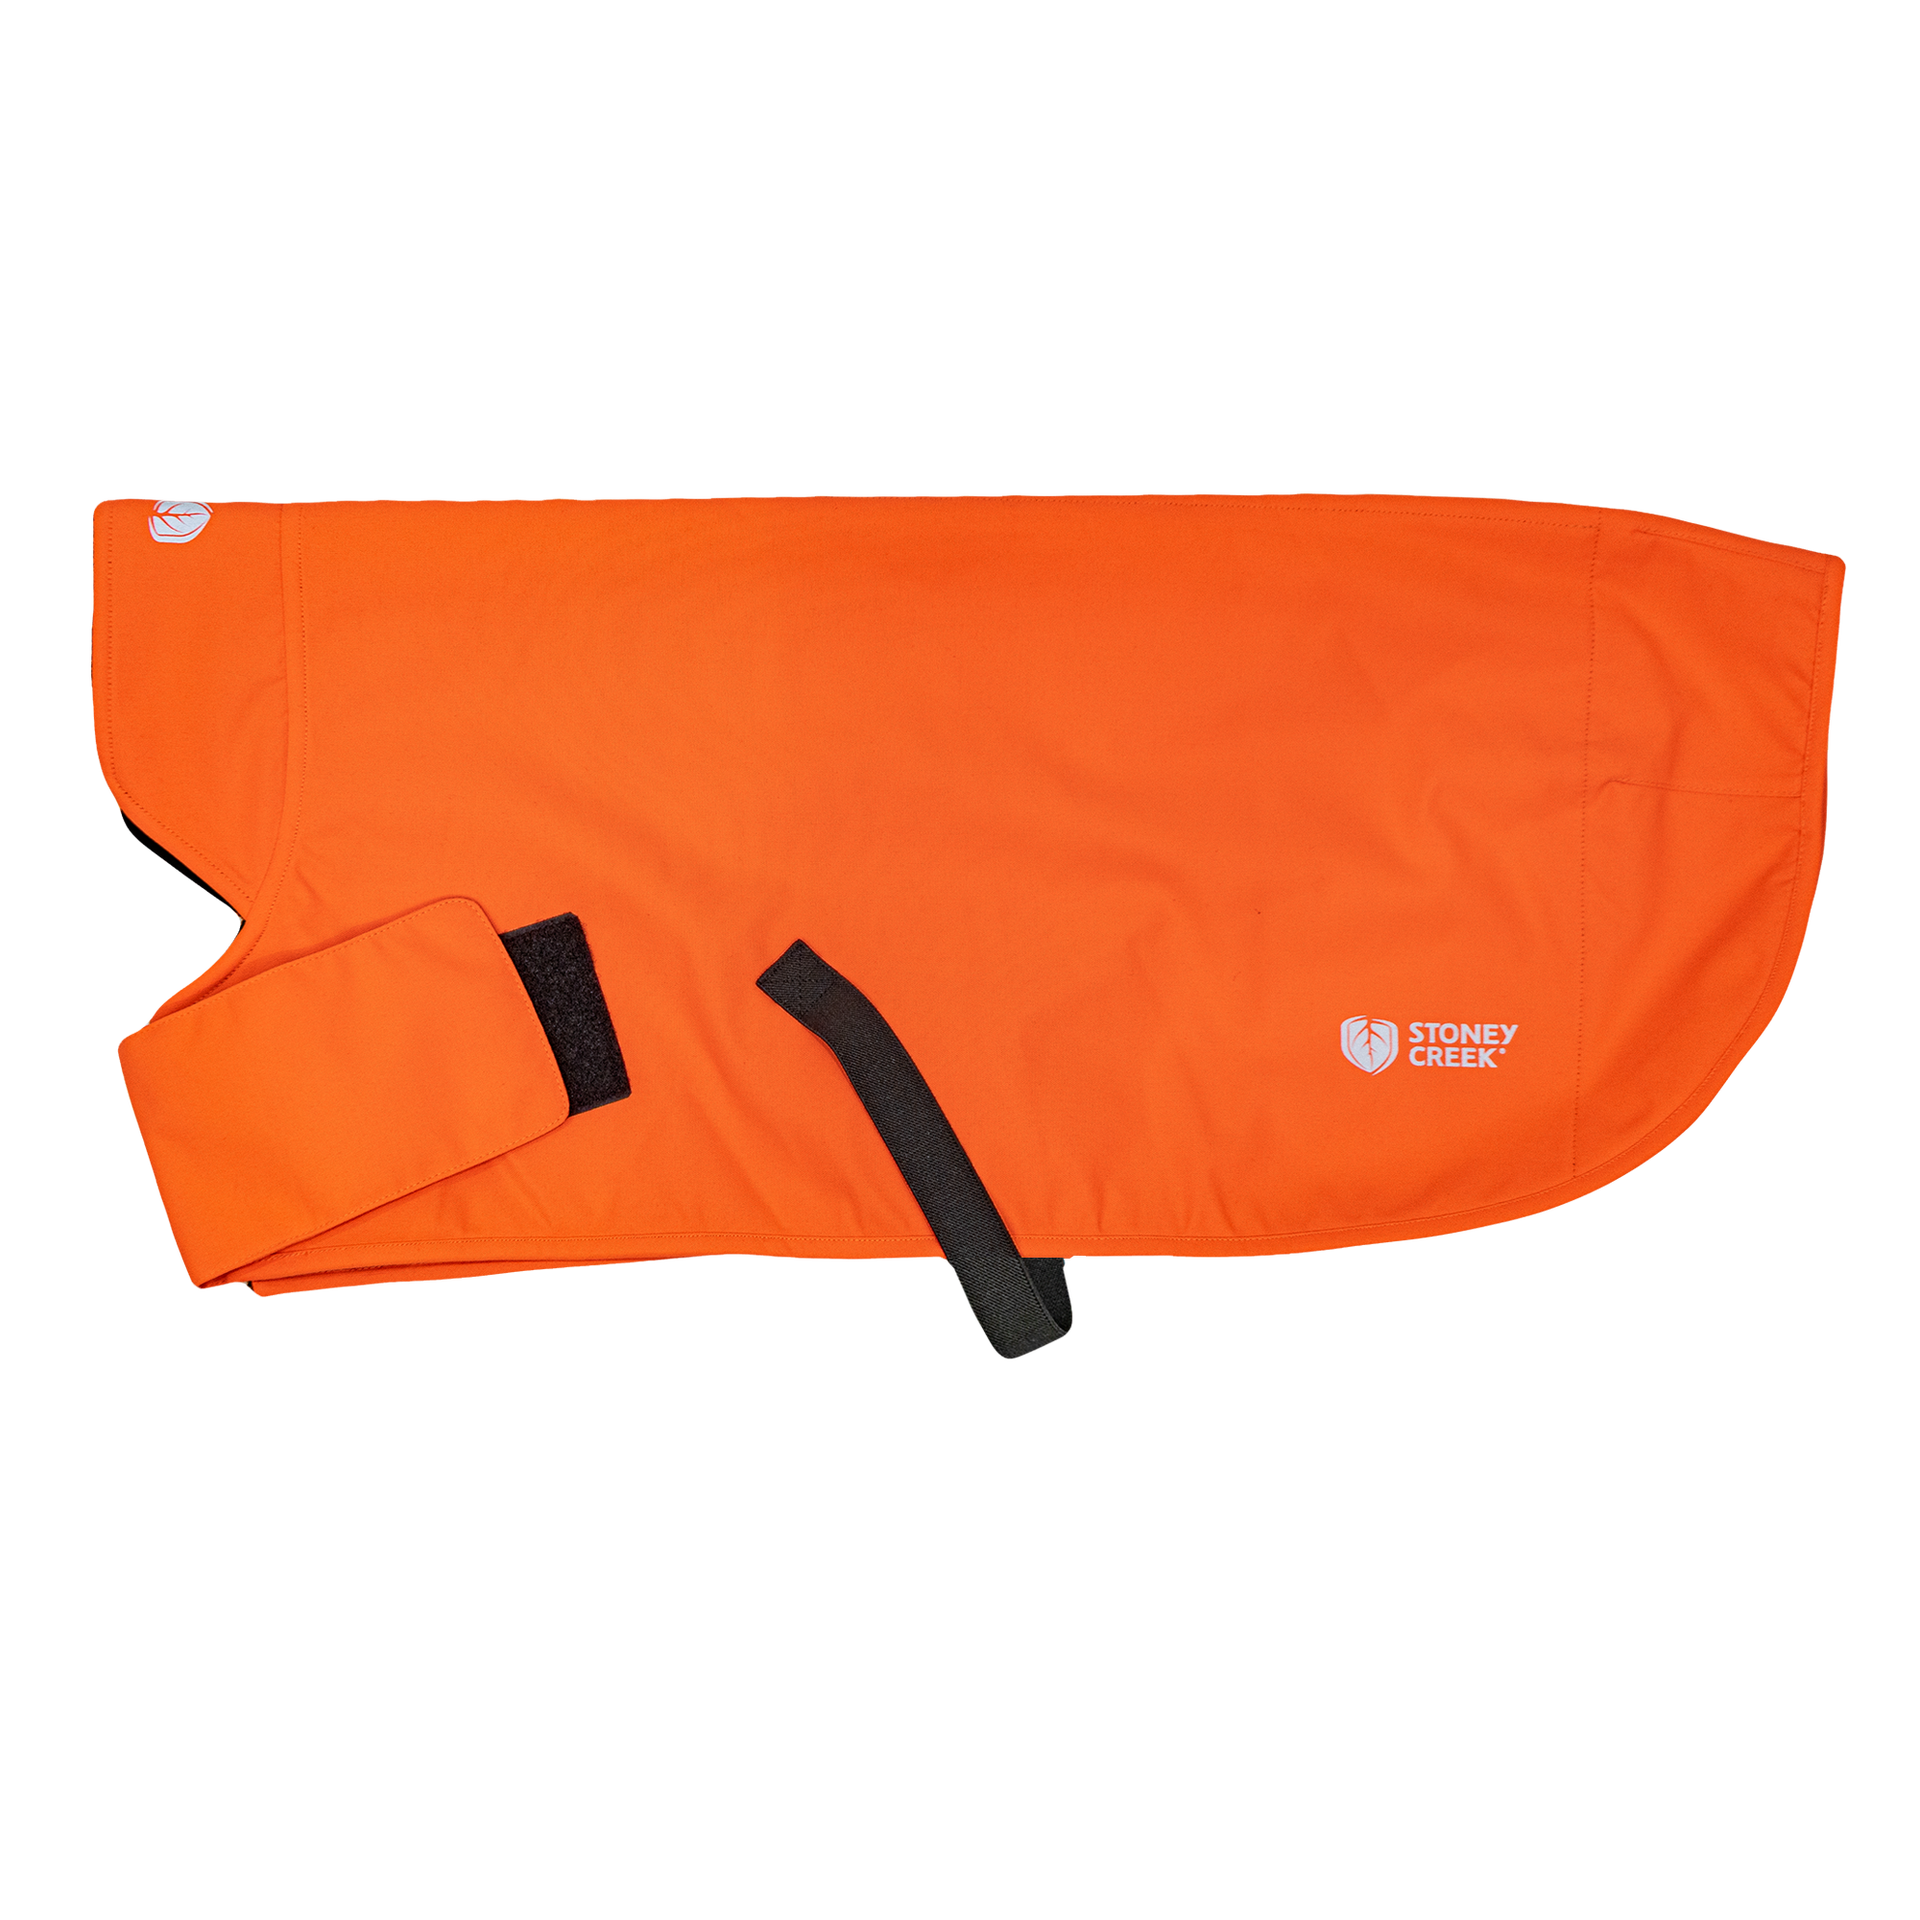 Stoney Creek Waterproof Dog Coat - Orange - S / ORANGE - Mansfield Hunting & Fishing - Products to prepare for Corona Virus